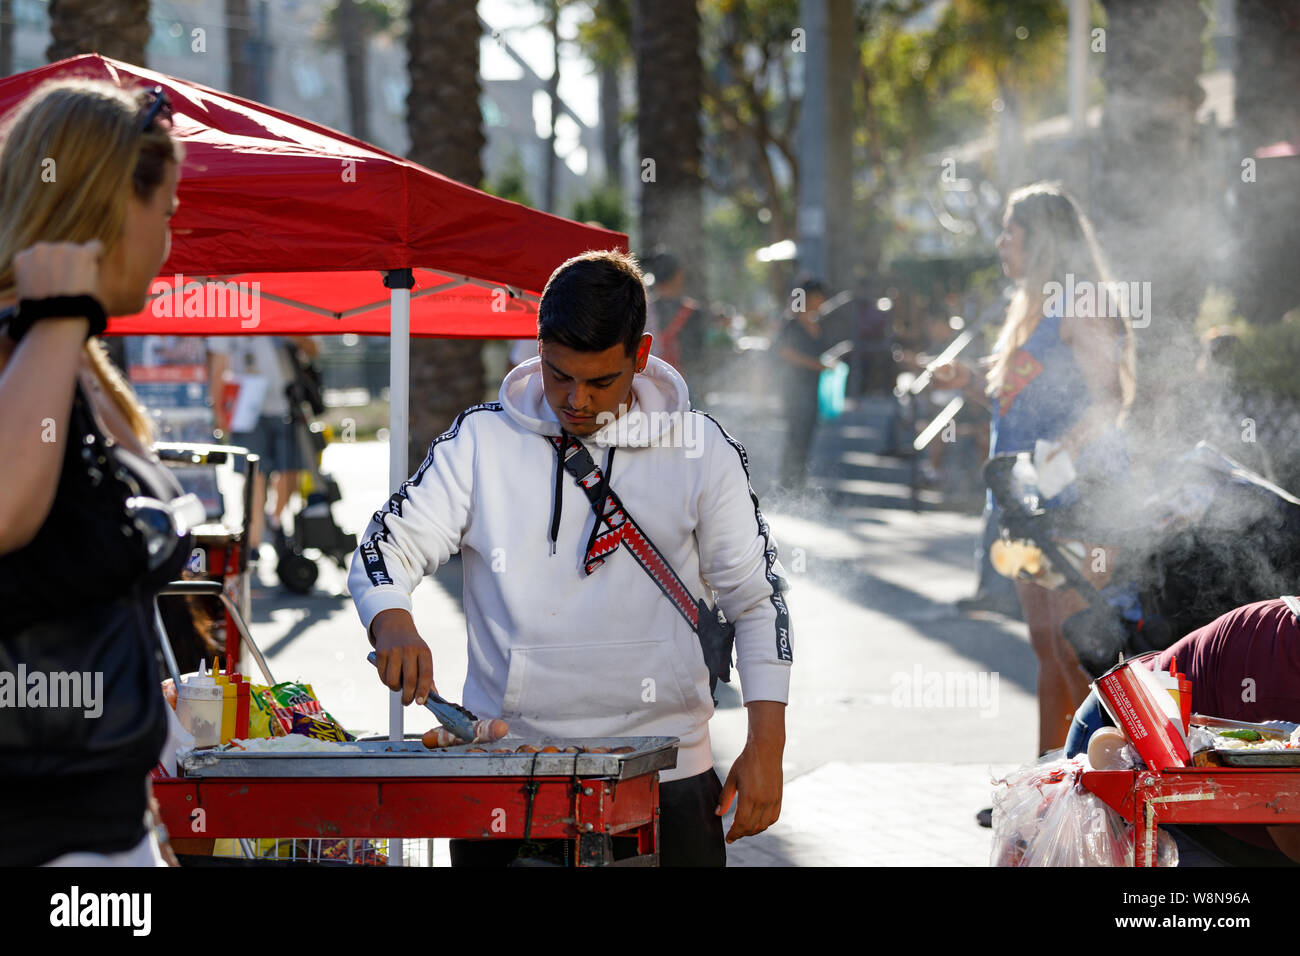 Hotdog vendor at Gaslamp Quarters during Comic Con 2019 Stock Photo